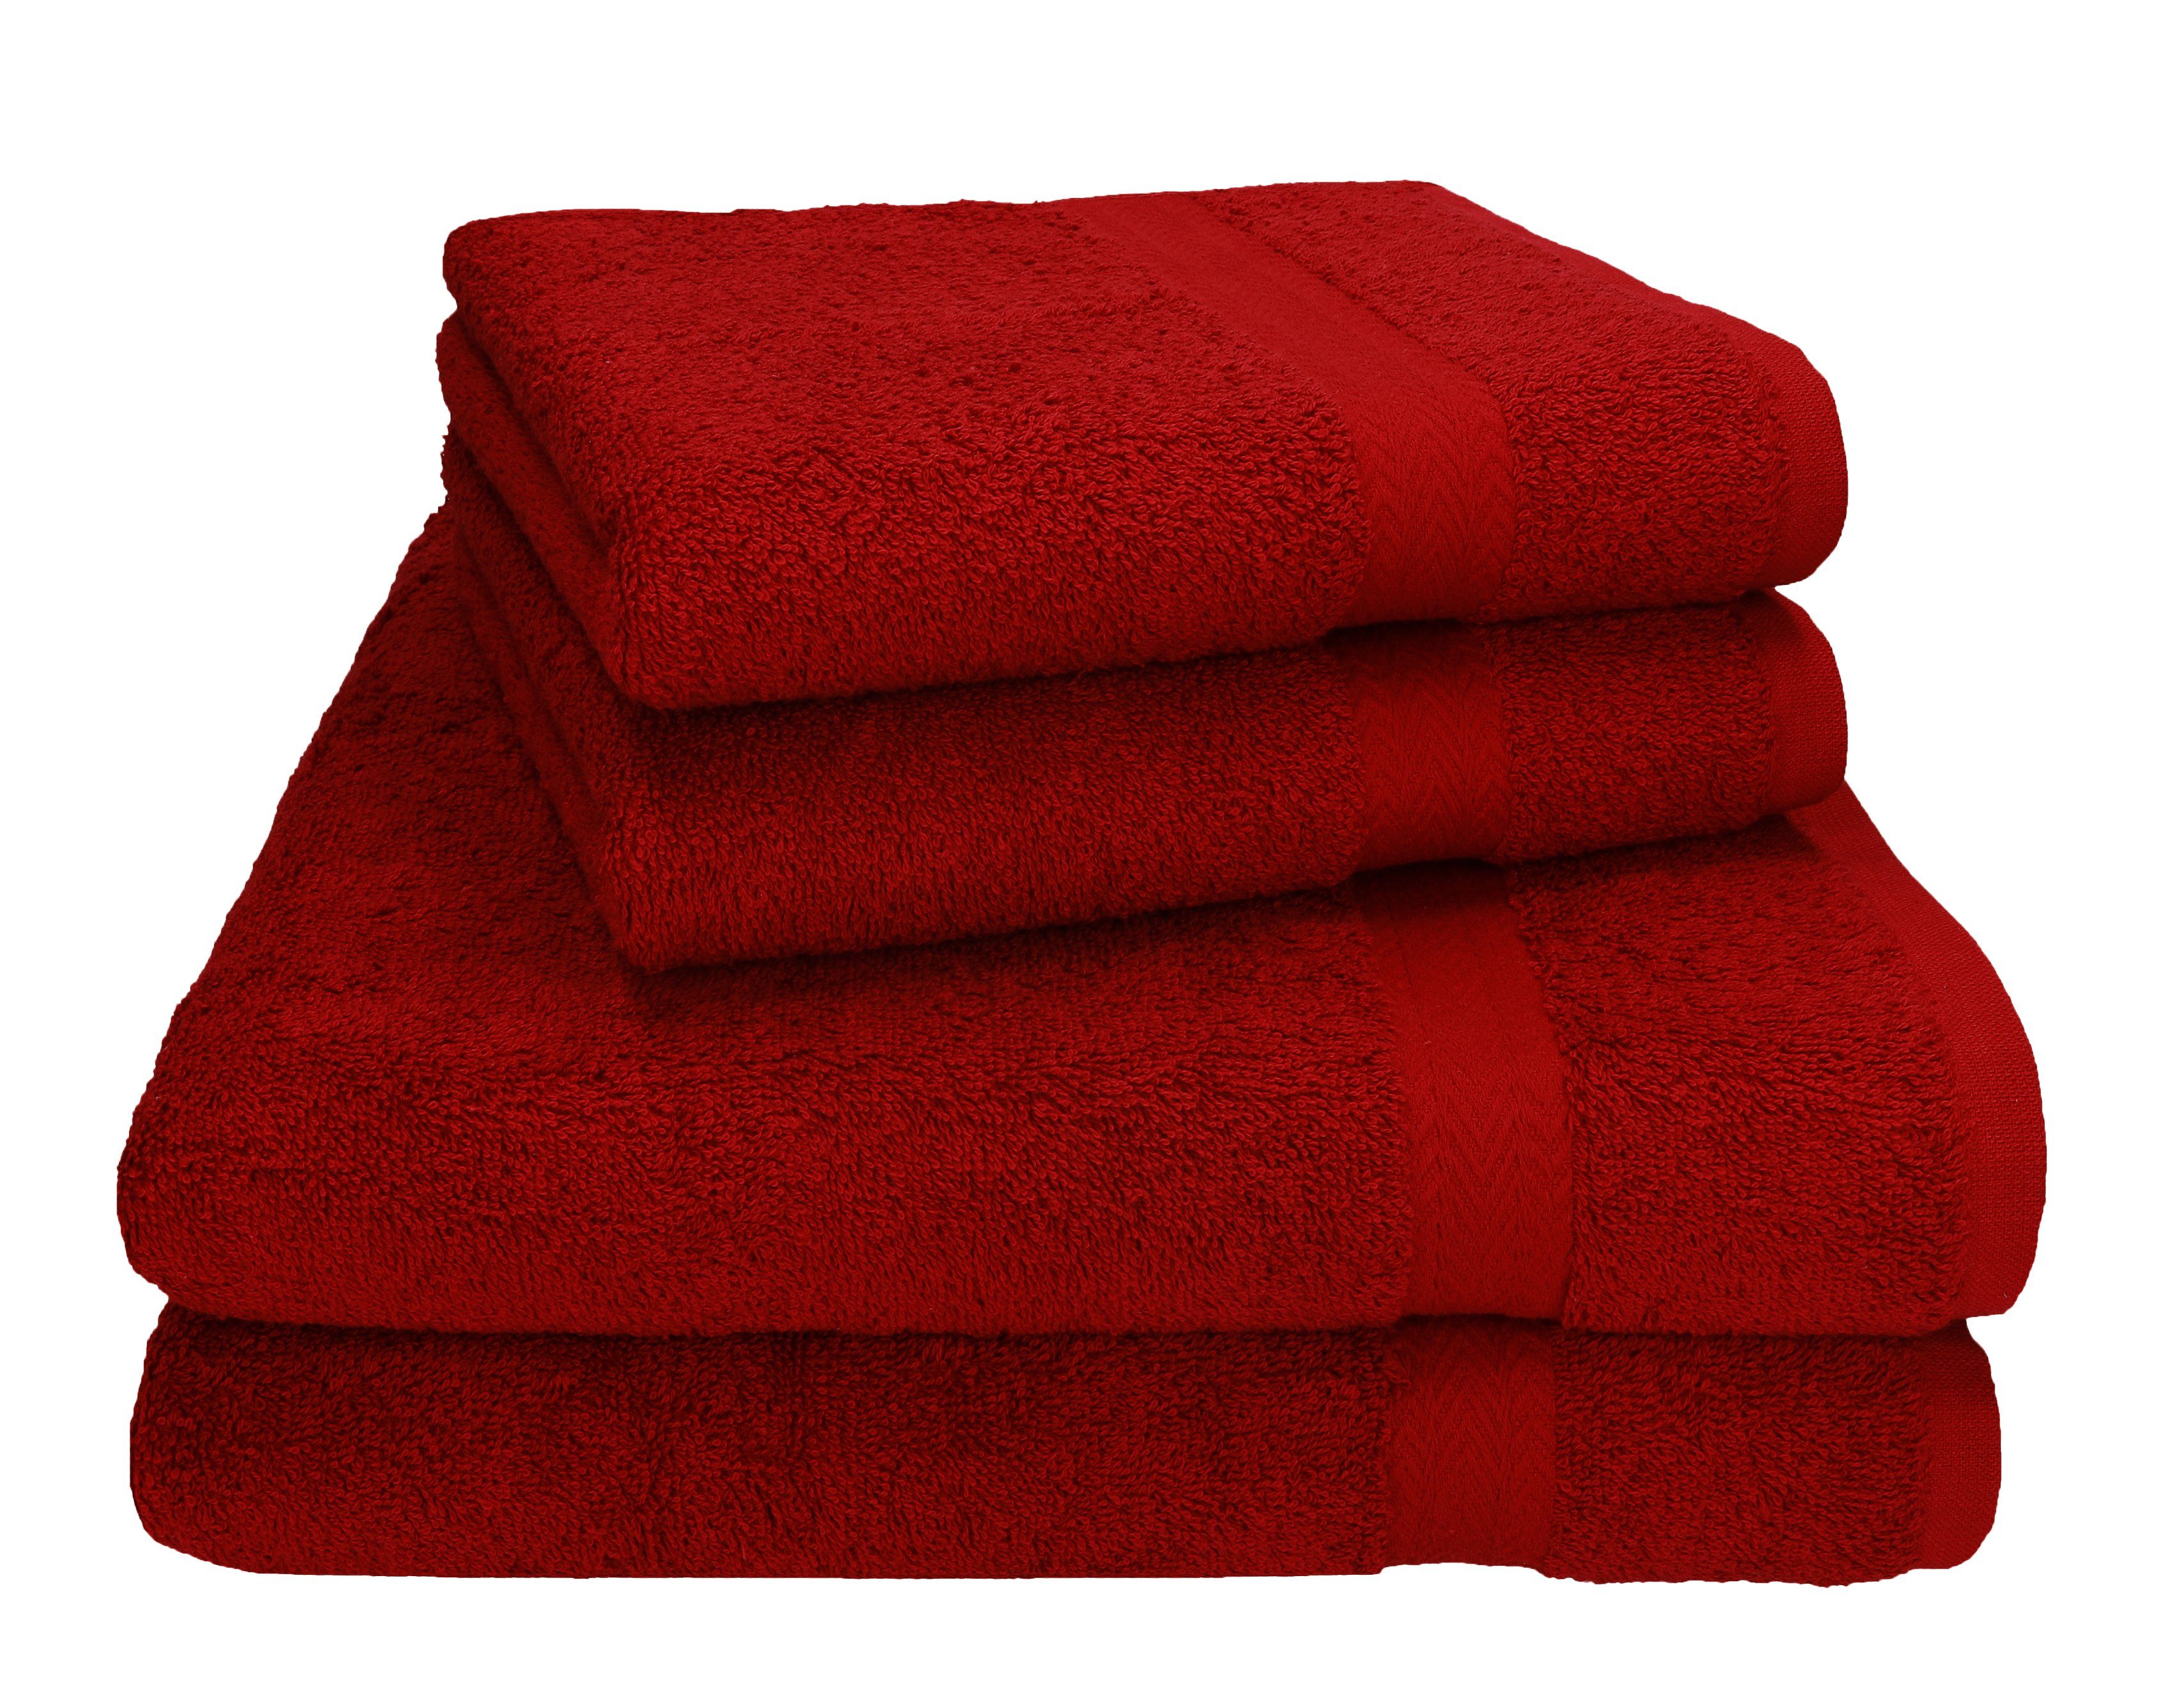 Betz Handtuch Set 4-tlg. Baumwolle, 100% Handtücher 2 (4-tlg) und PREMIUM 2 Duschtücher, dunkelrot